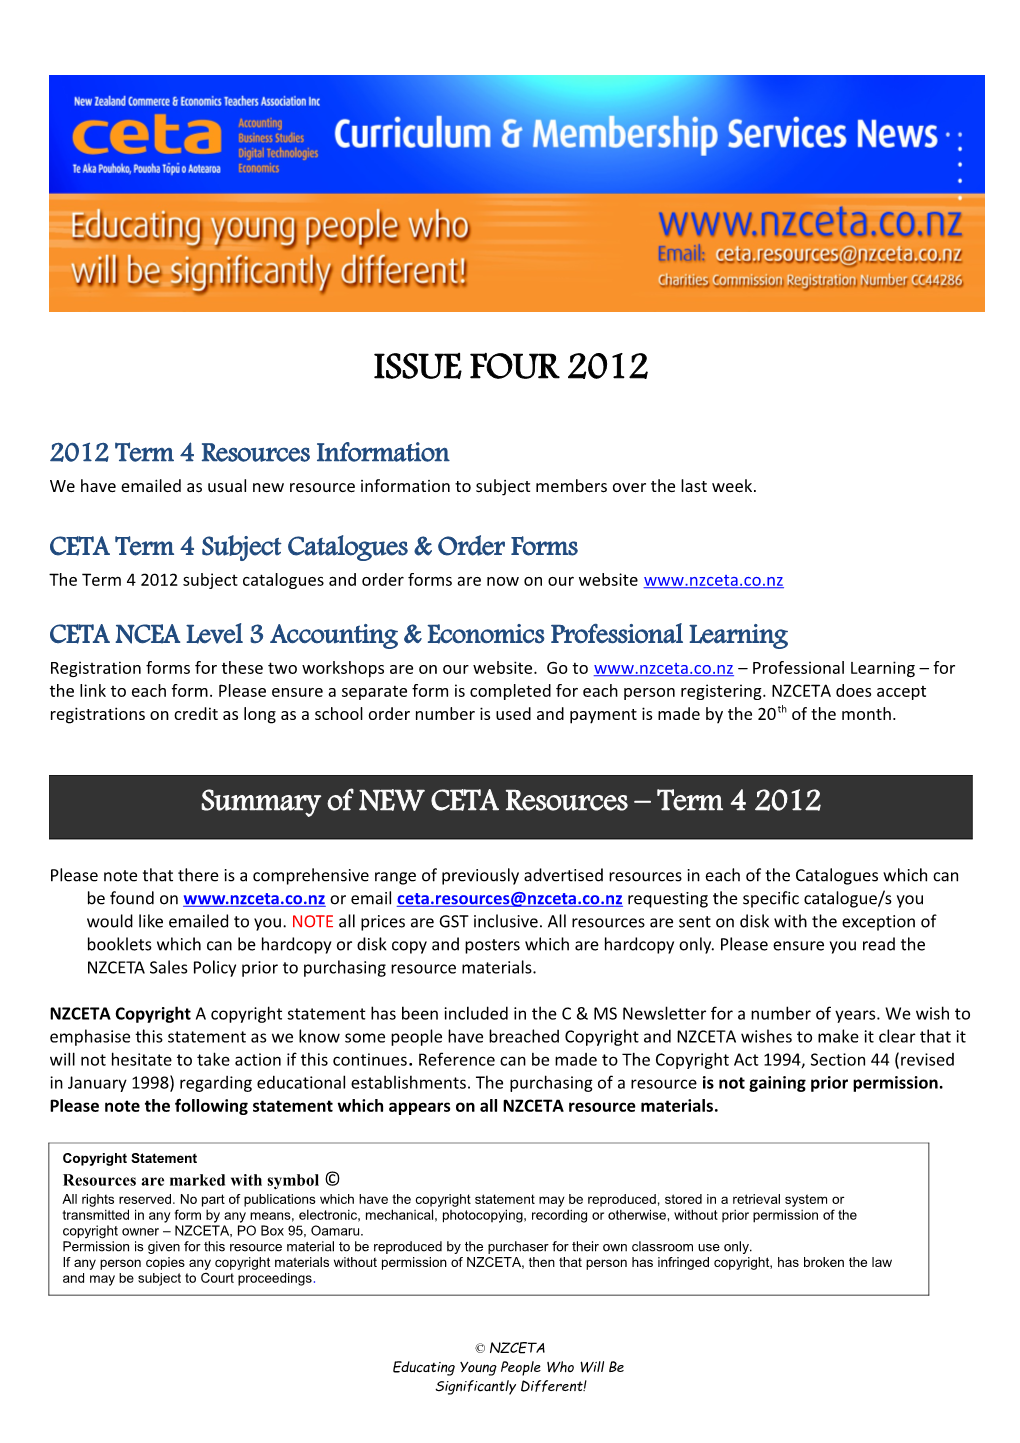 CETA Term 4 Subject Catalogues & Order Forms